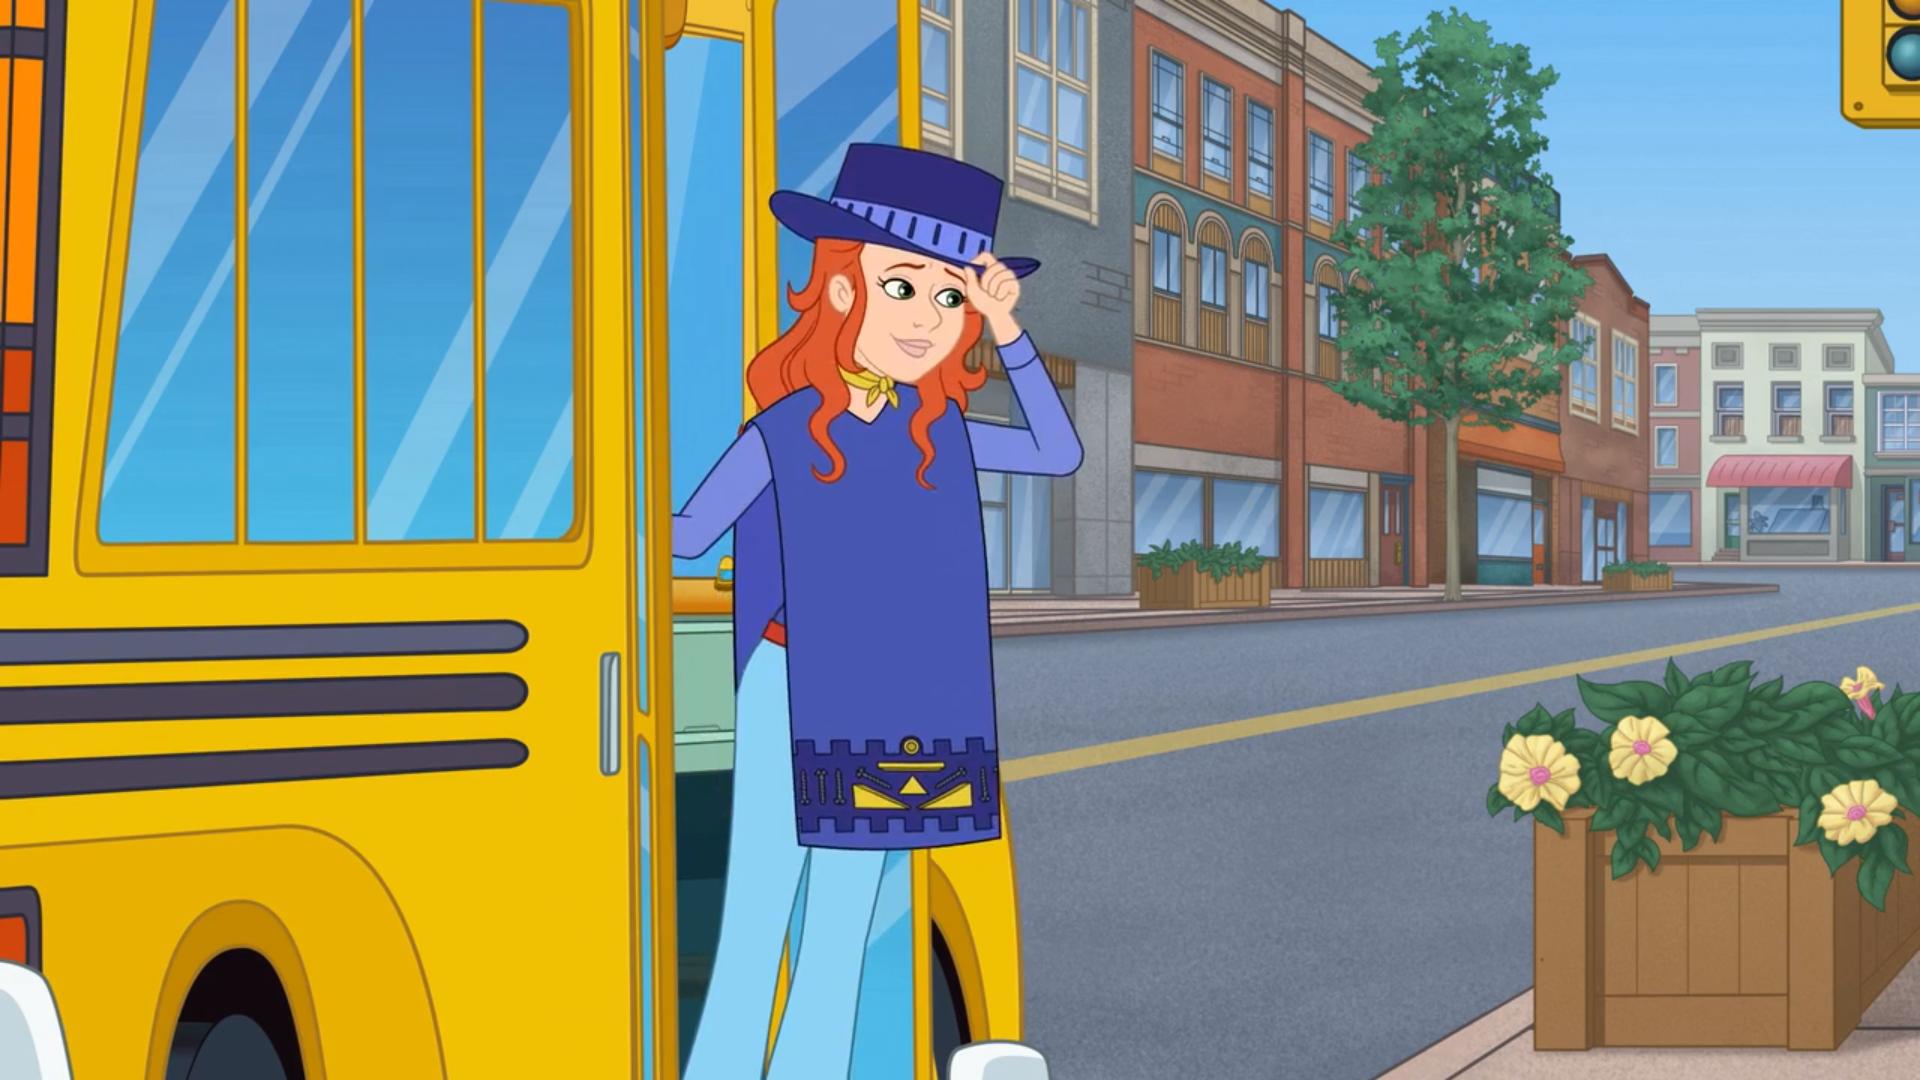 The Magic School Bus Rides Again (TV Series 2017–2018)